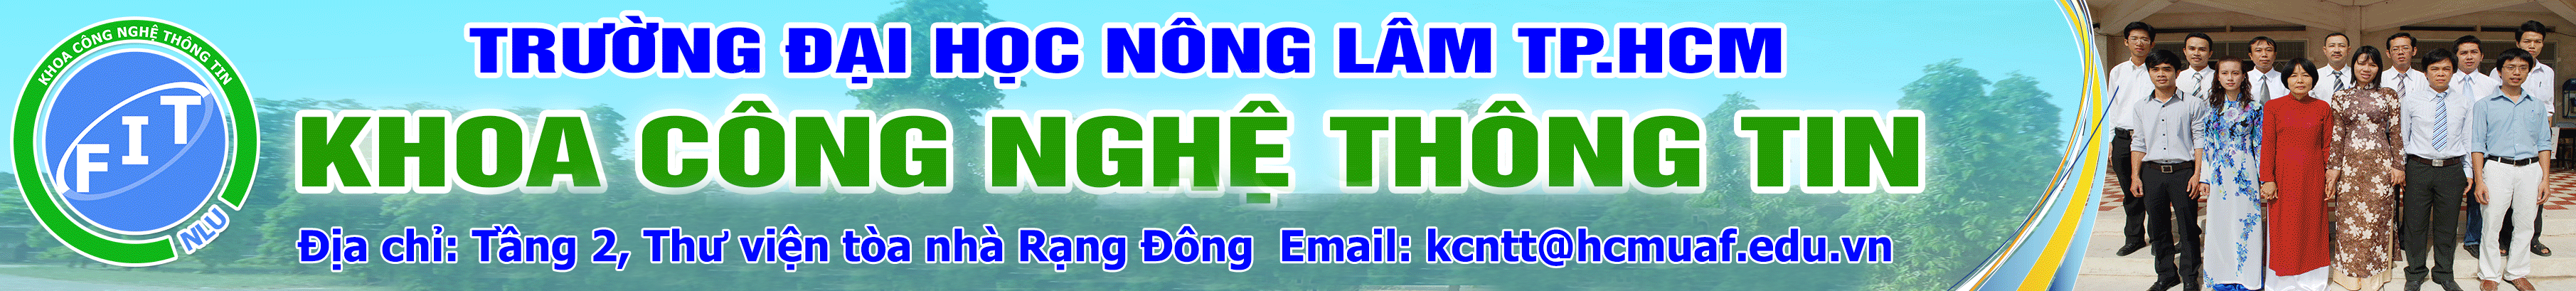 Khoa Cong Nghe Thong Tin - DH Nong Lam TP.HCM